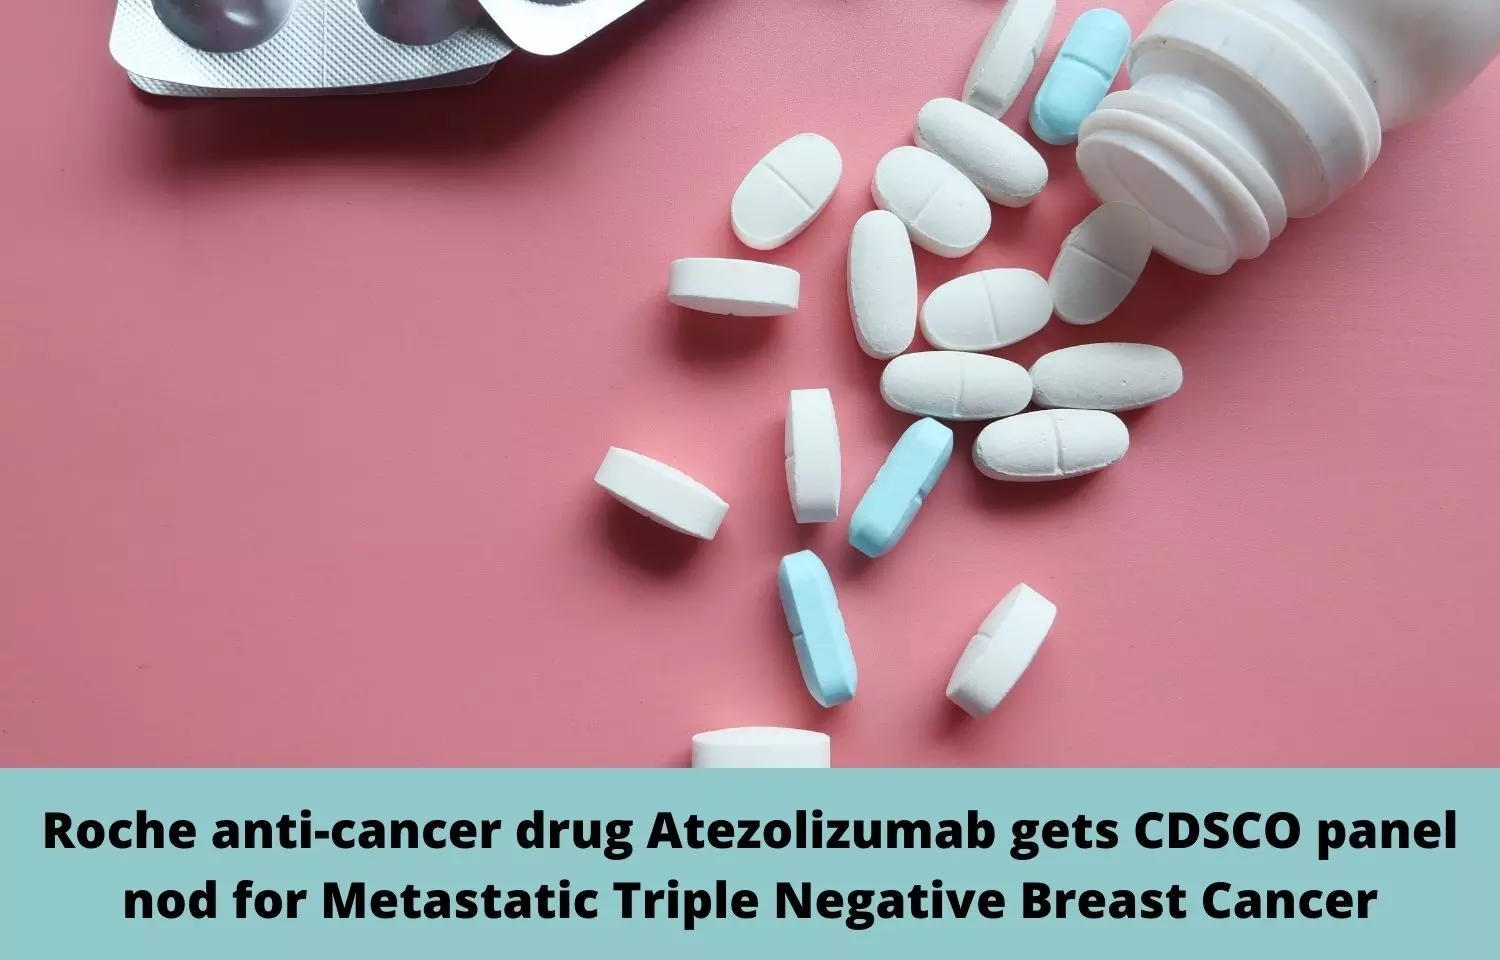 Roche anti-cancer drug Atezolizumab gets CDSCO panel nod for Metastatic Triple Negative Breast Cancer